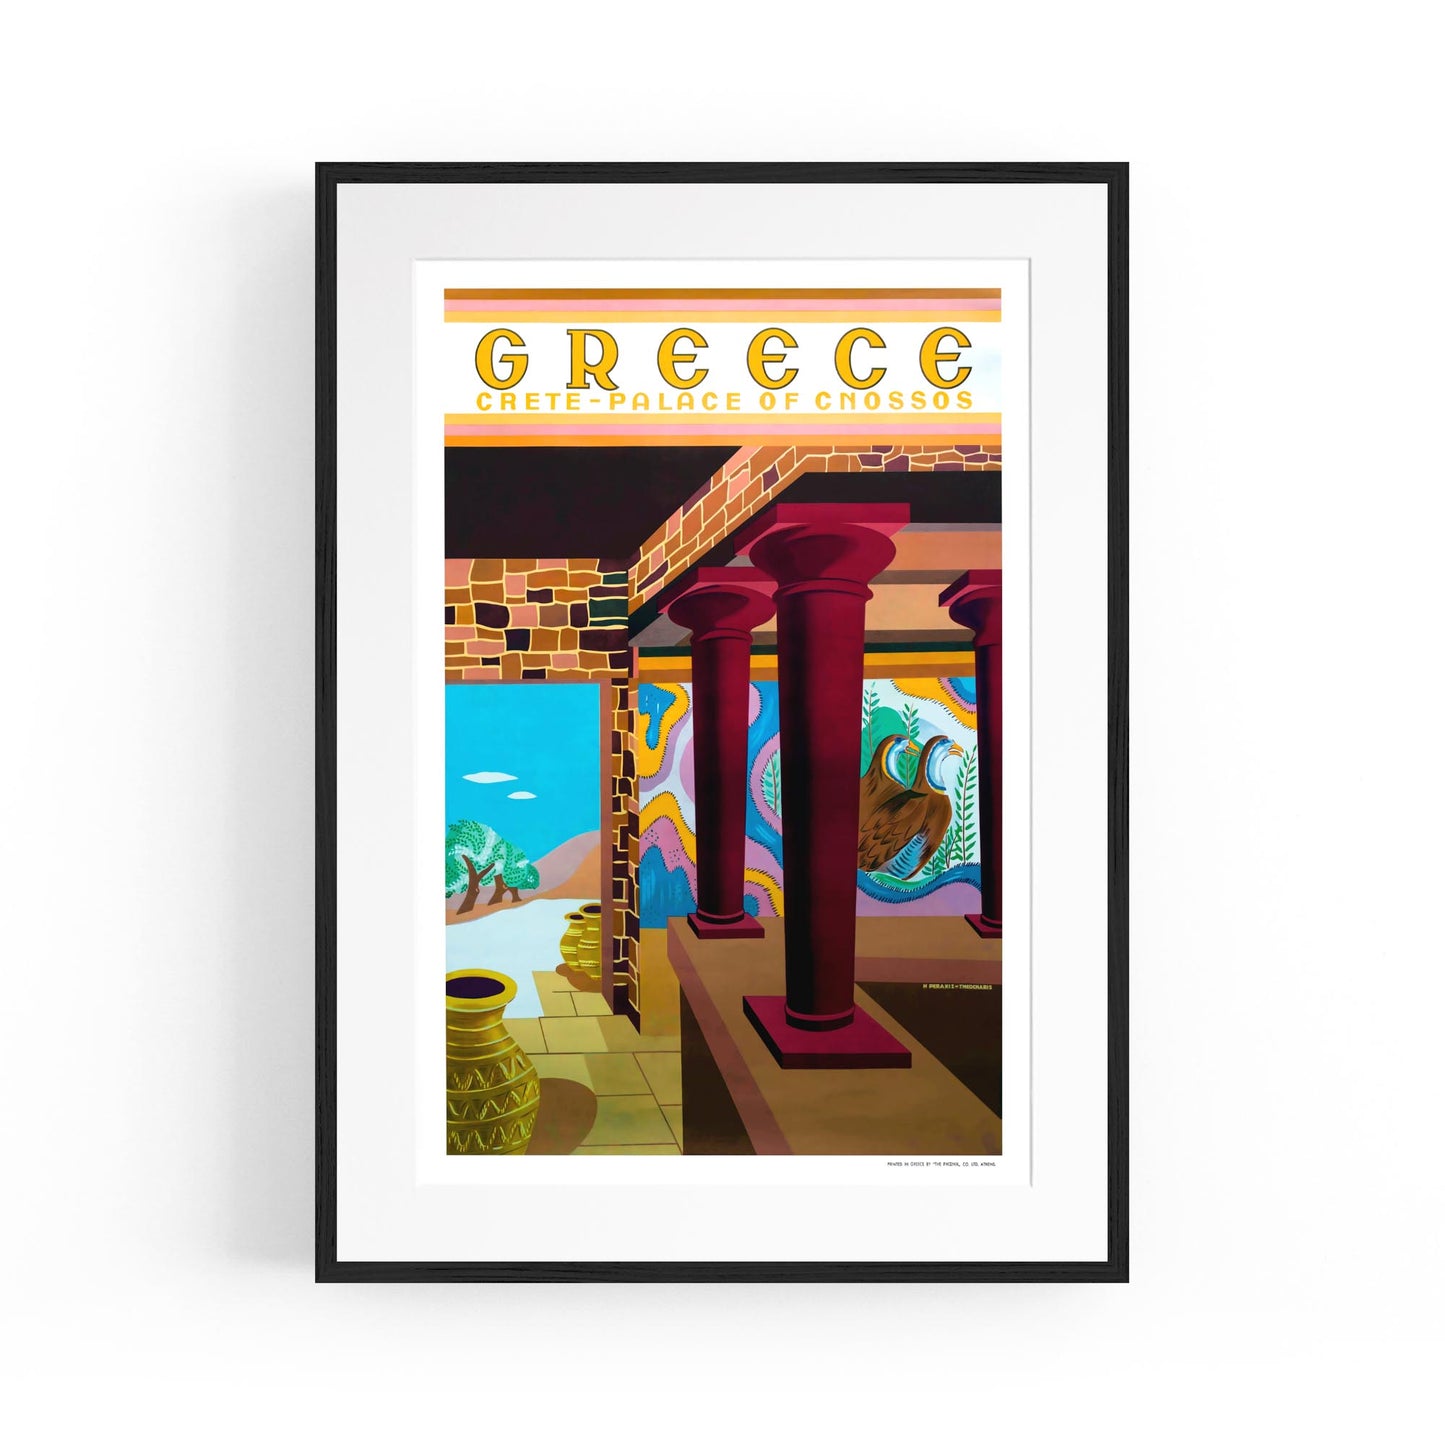 Crete, Greece "Palace of Cnossos" | Framed Vintage Travel Poster